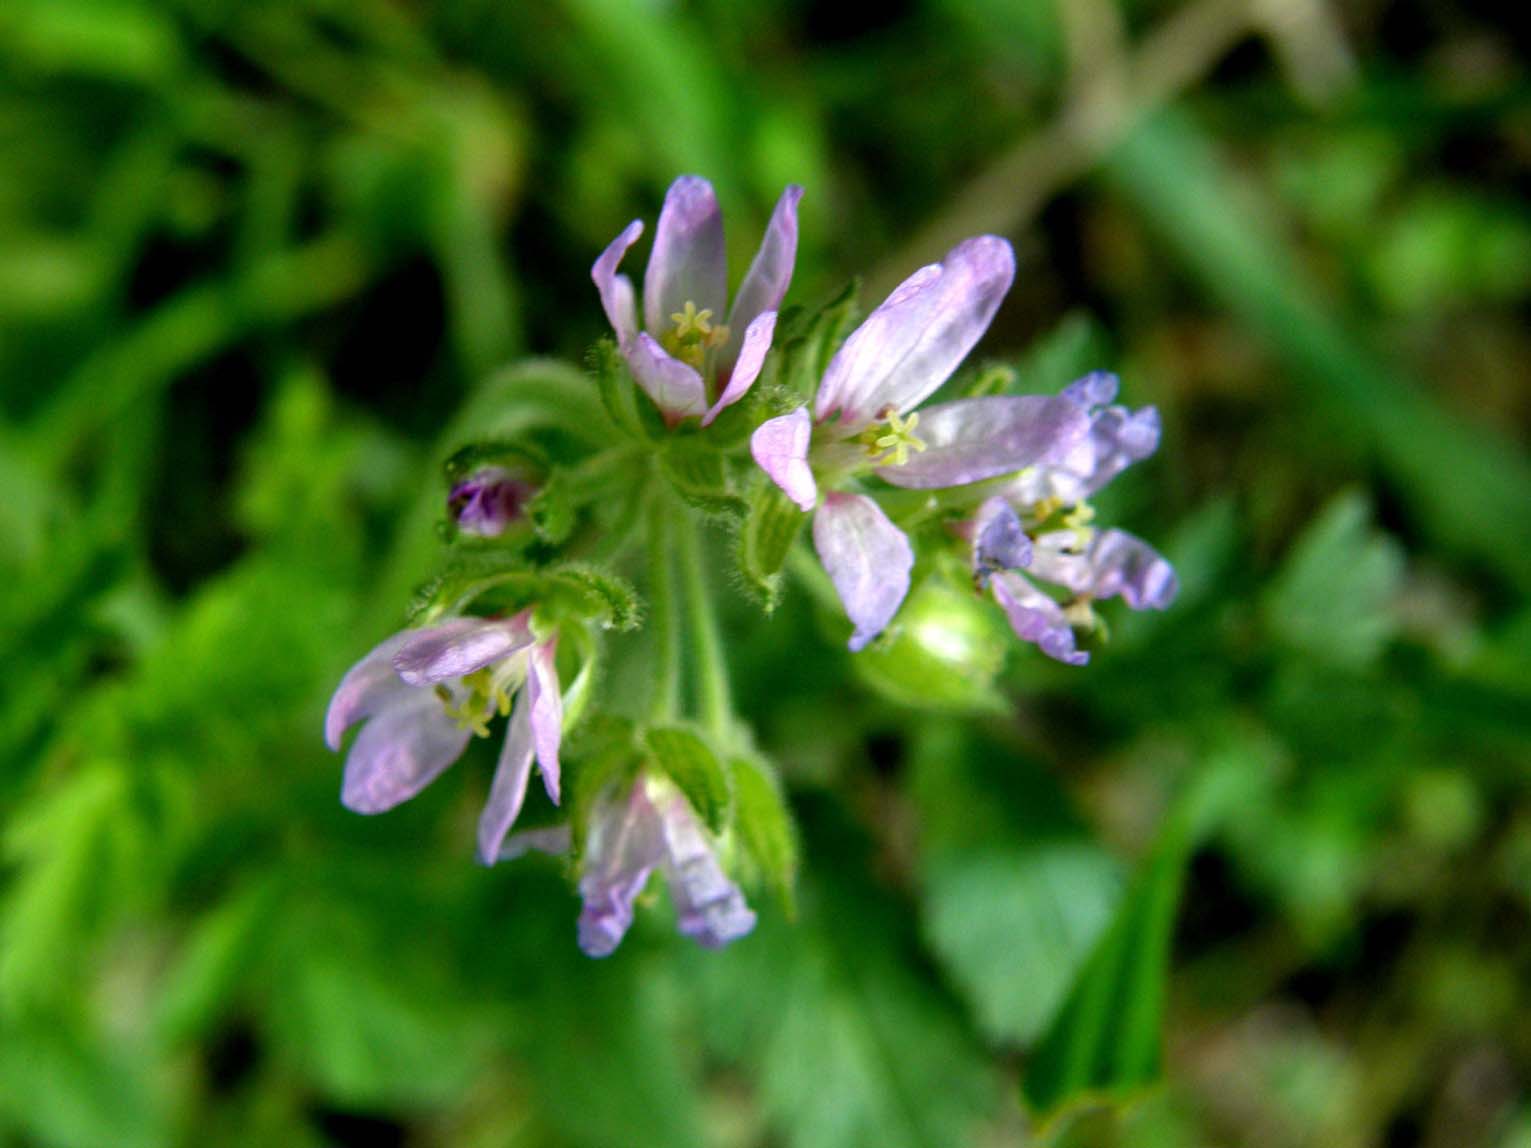 Fiore di campo violetto - Erodium cfr. moschatum (Geraniaceae)